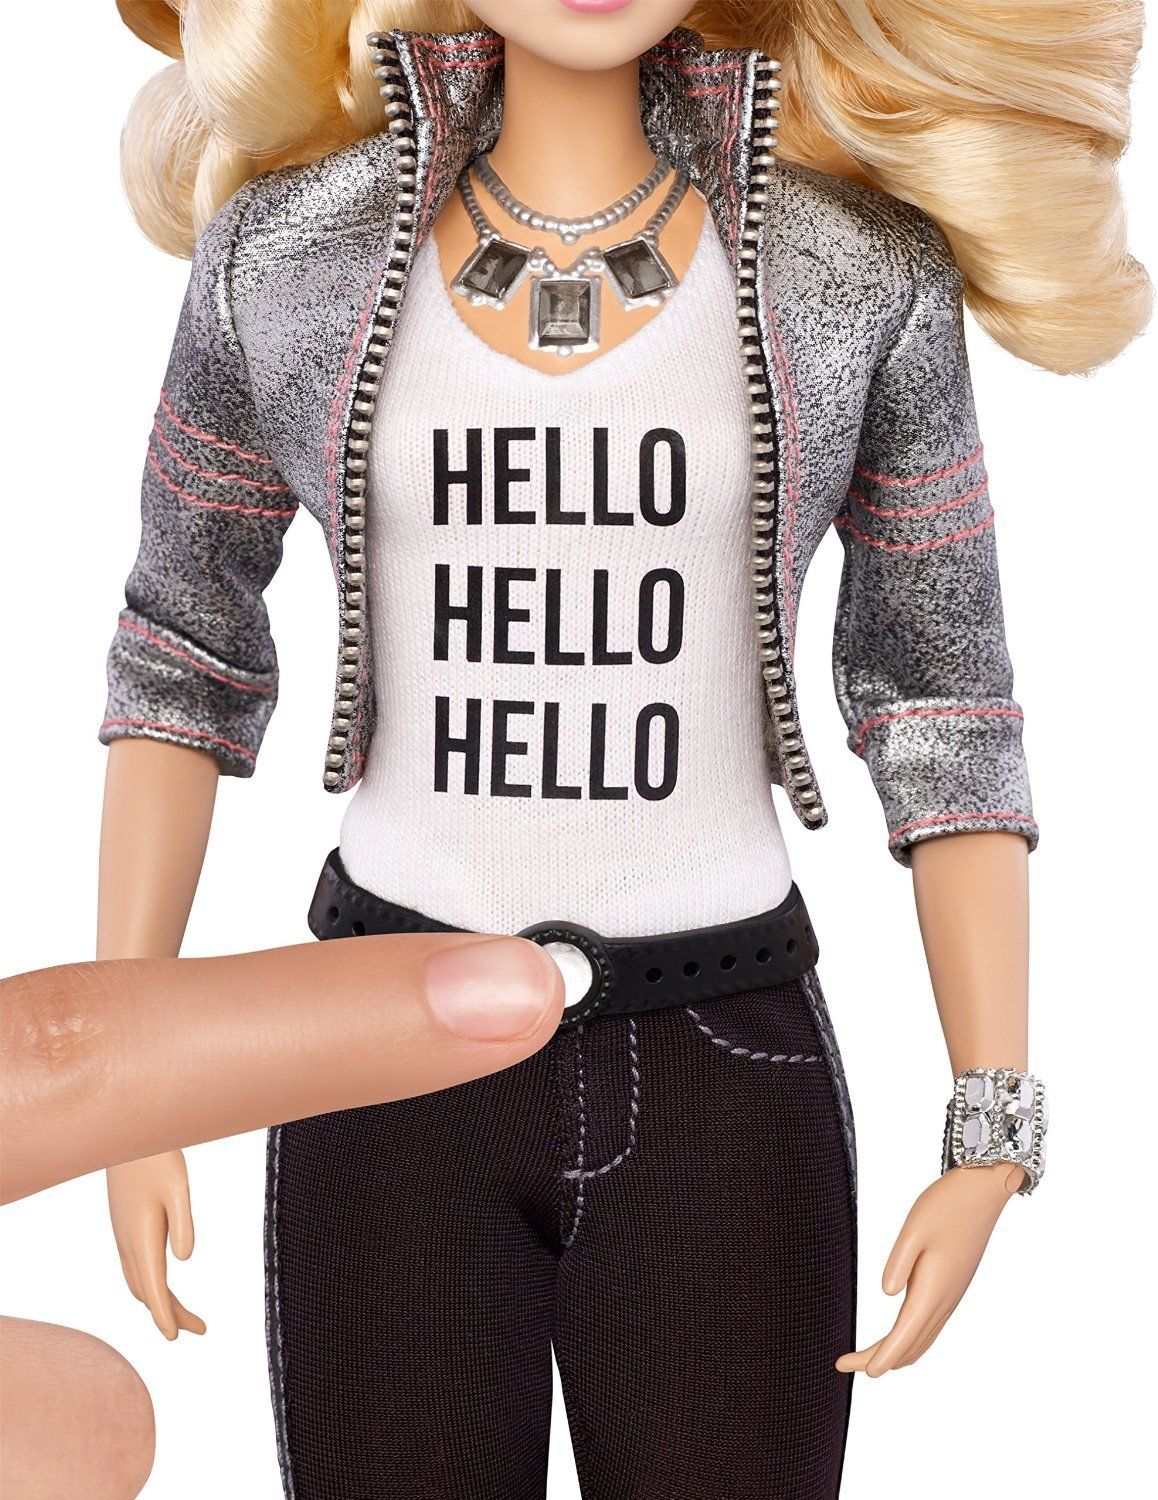 hello Barbie: the talking Wi-Fi Barbie